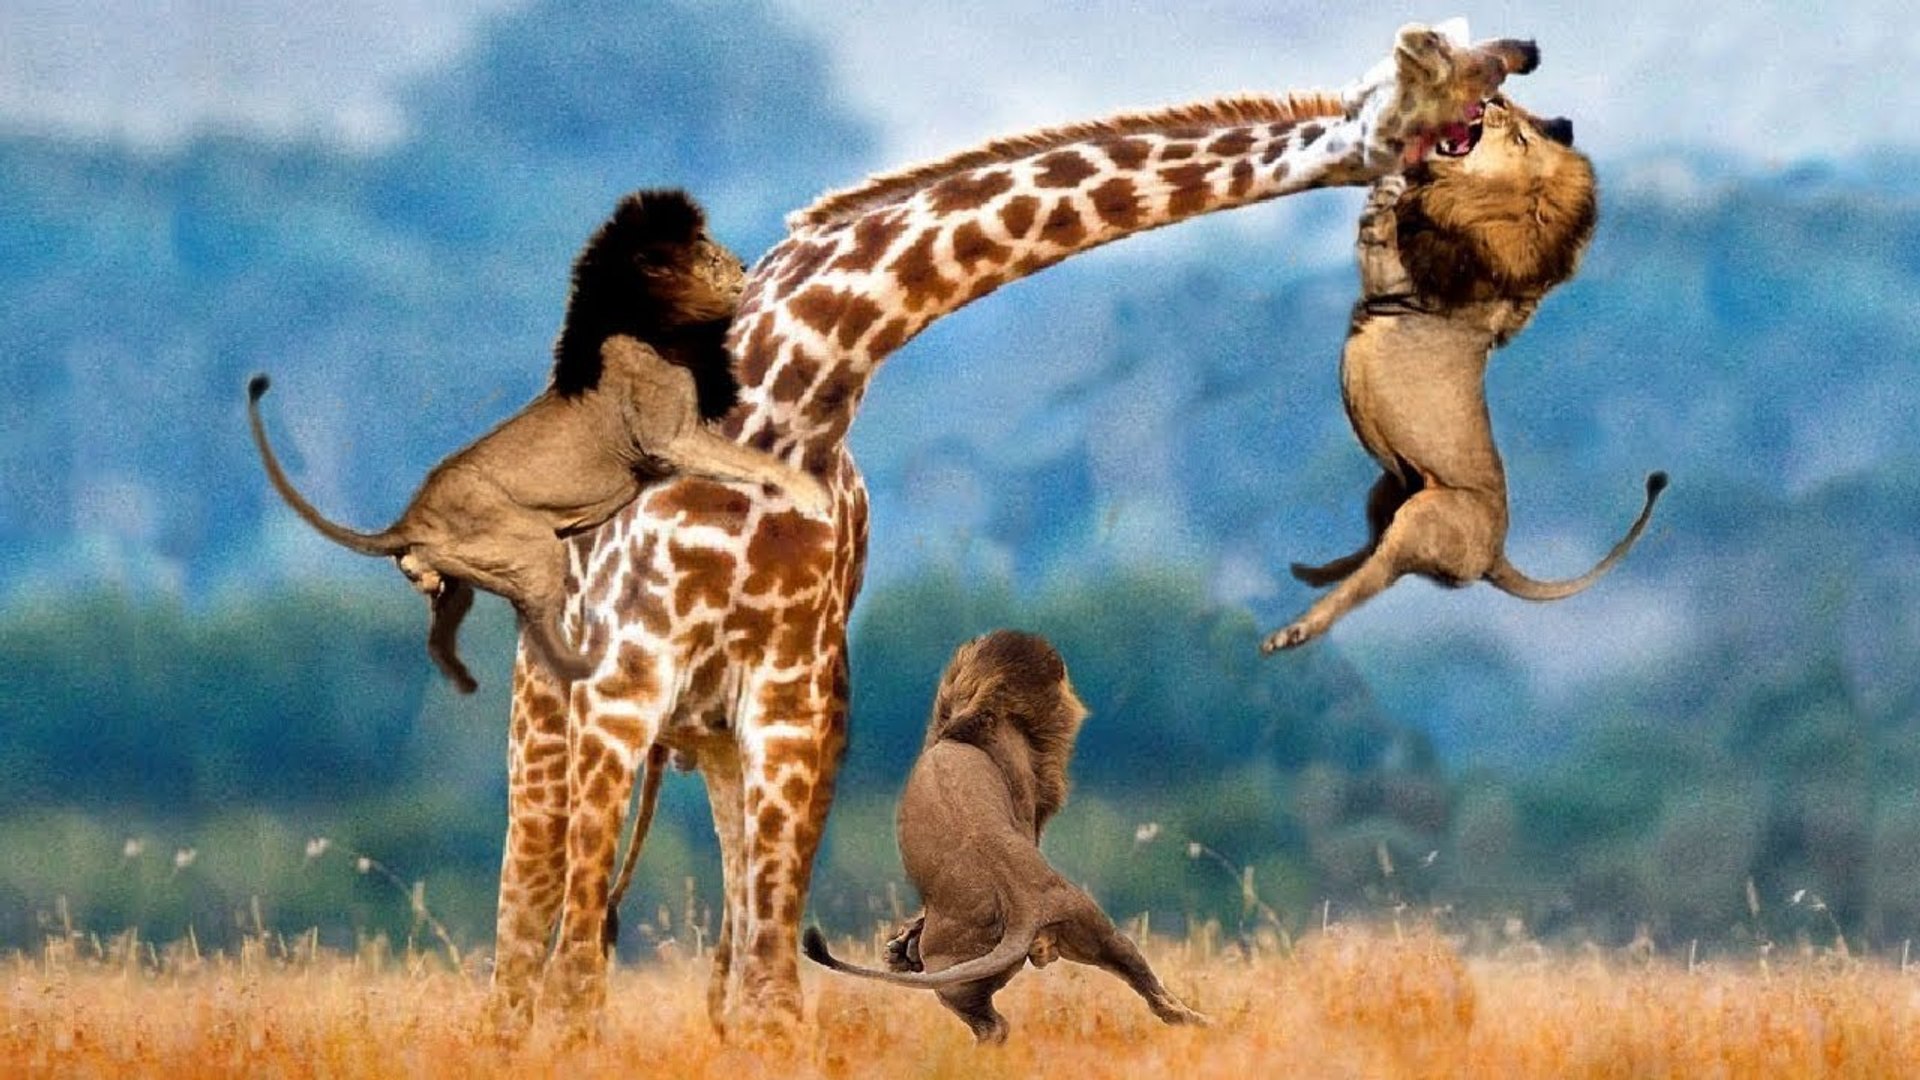 Dangerous wild animals. Жираф и Лев. Нападение диких животных. Львы нападают на жирафа. Охота Льва на жирафа.